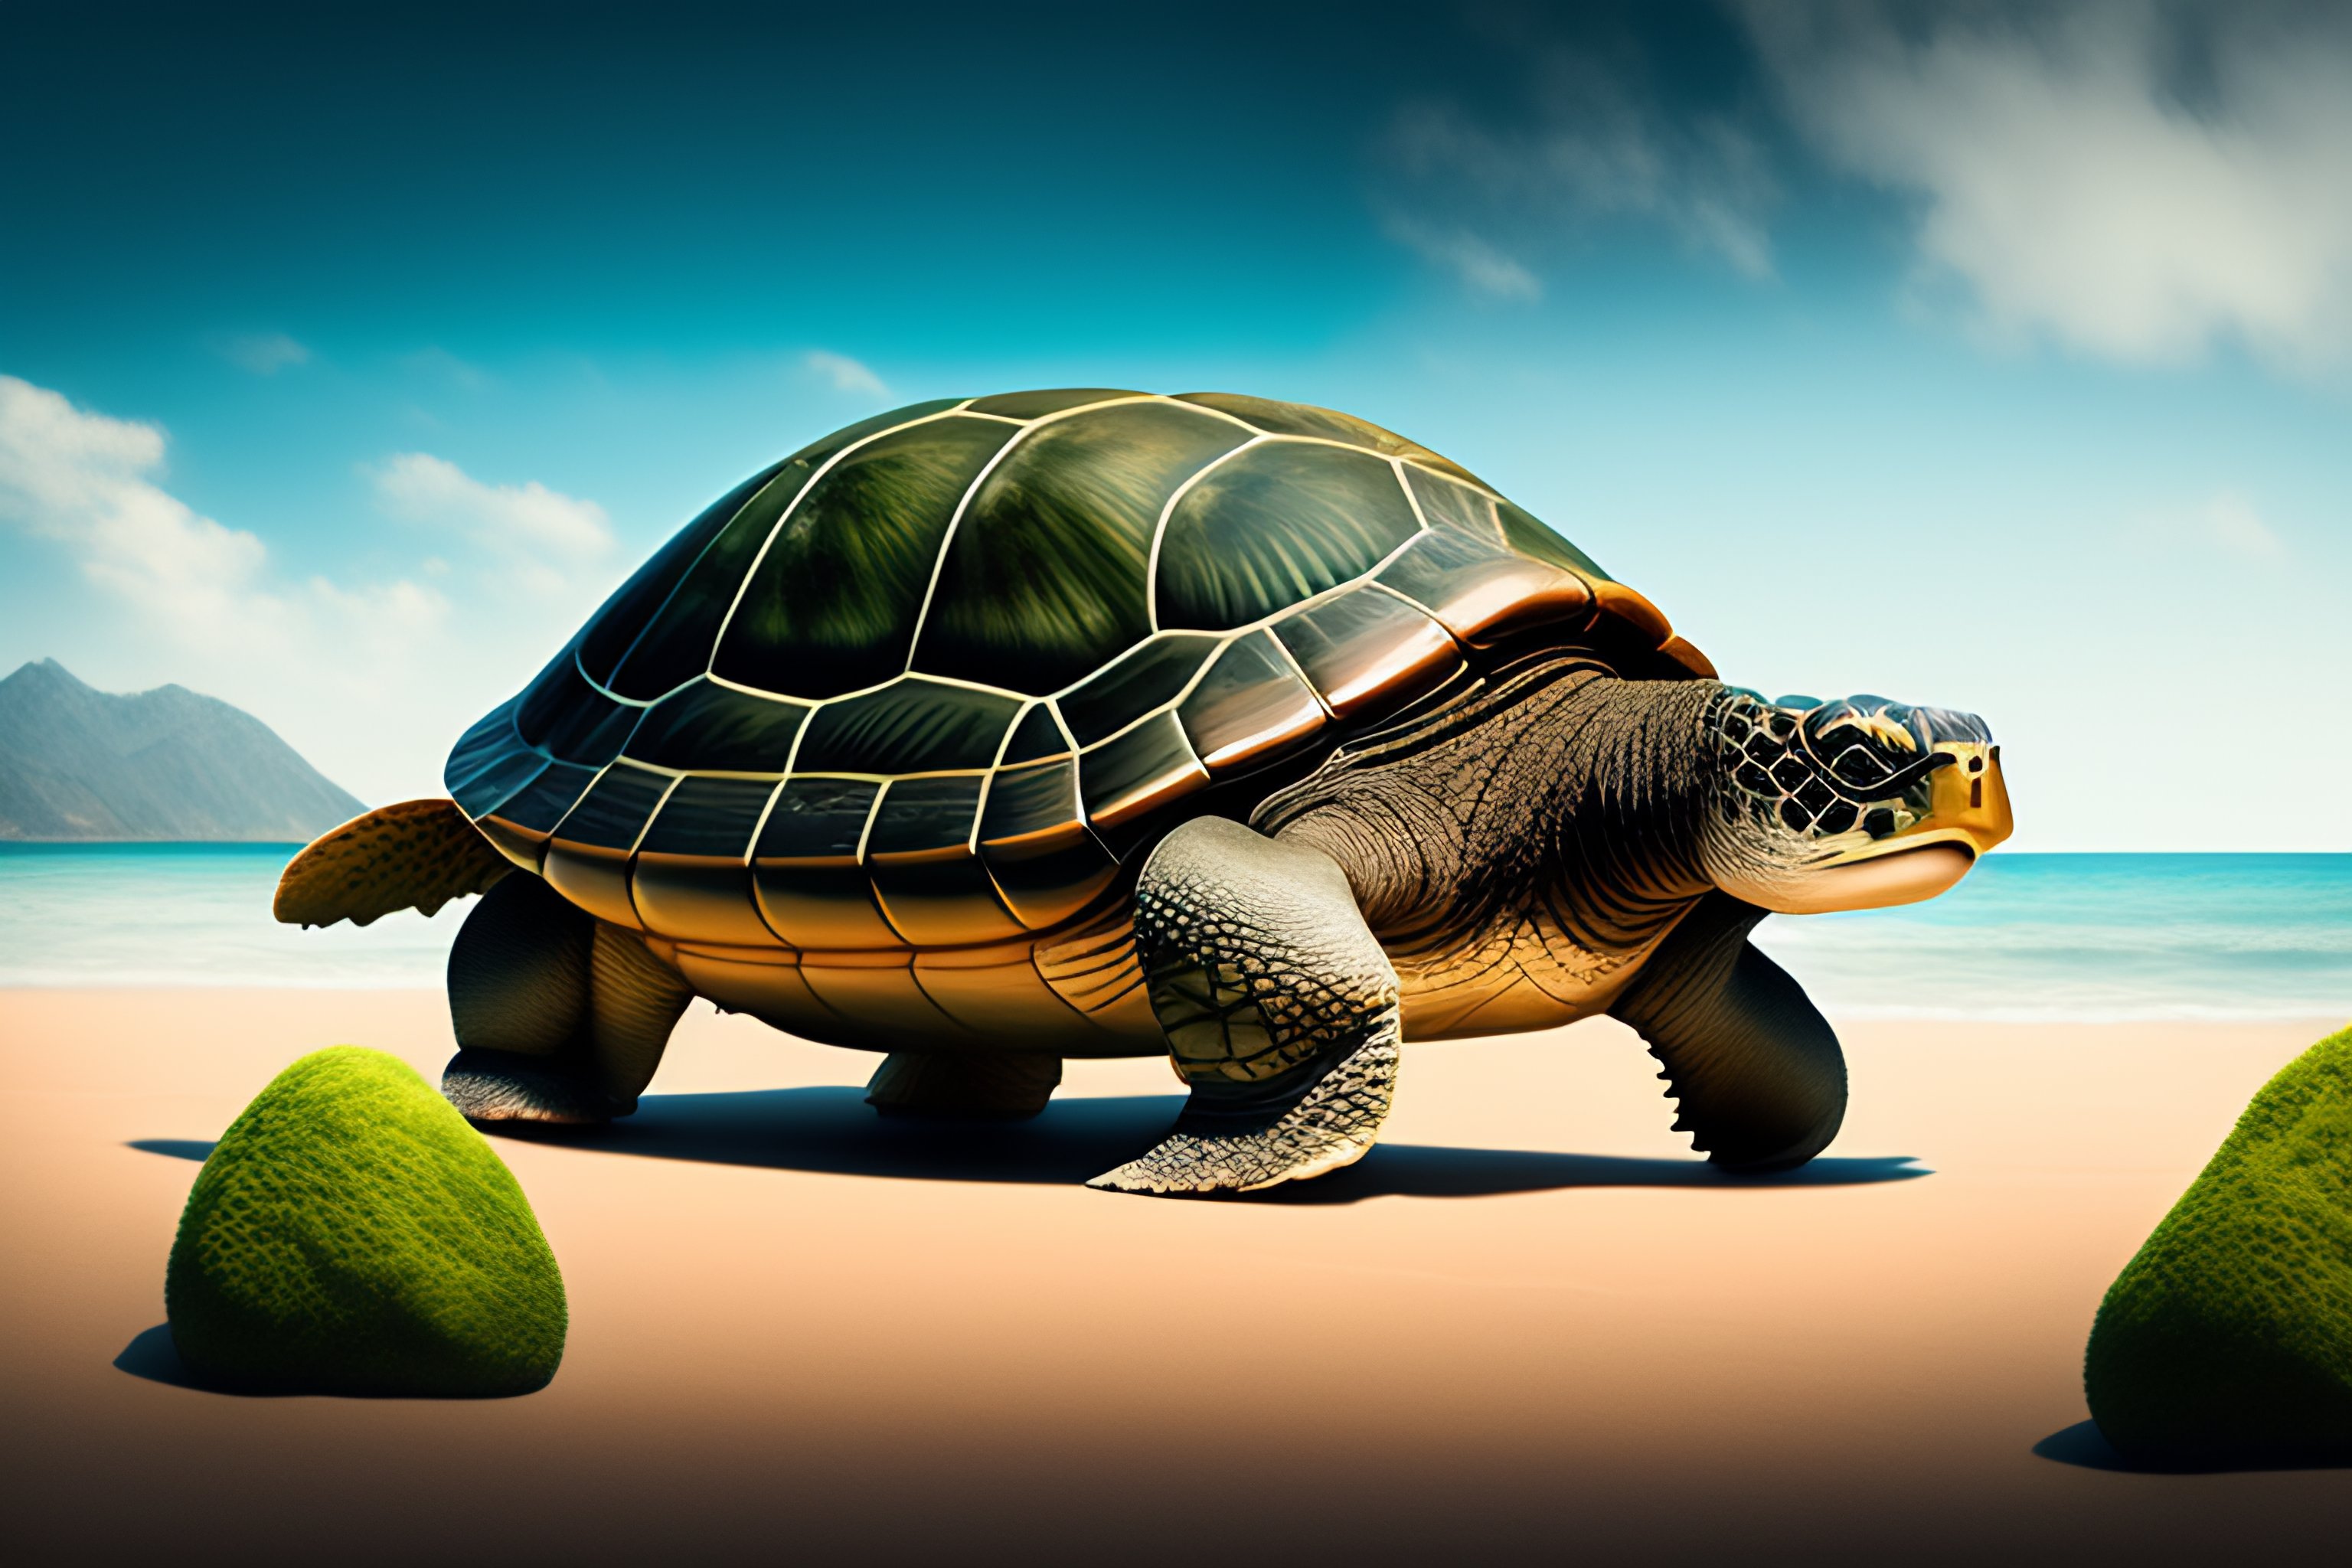 Lexica - Giant turtle fighting godzilla